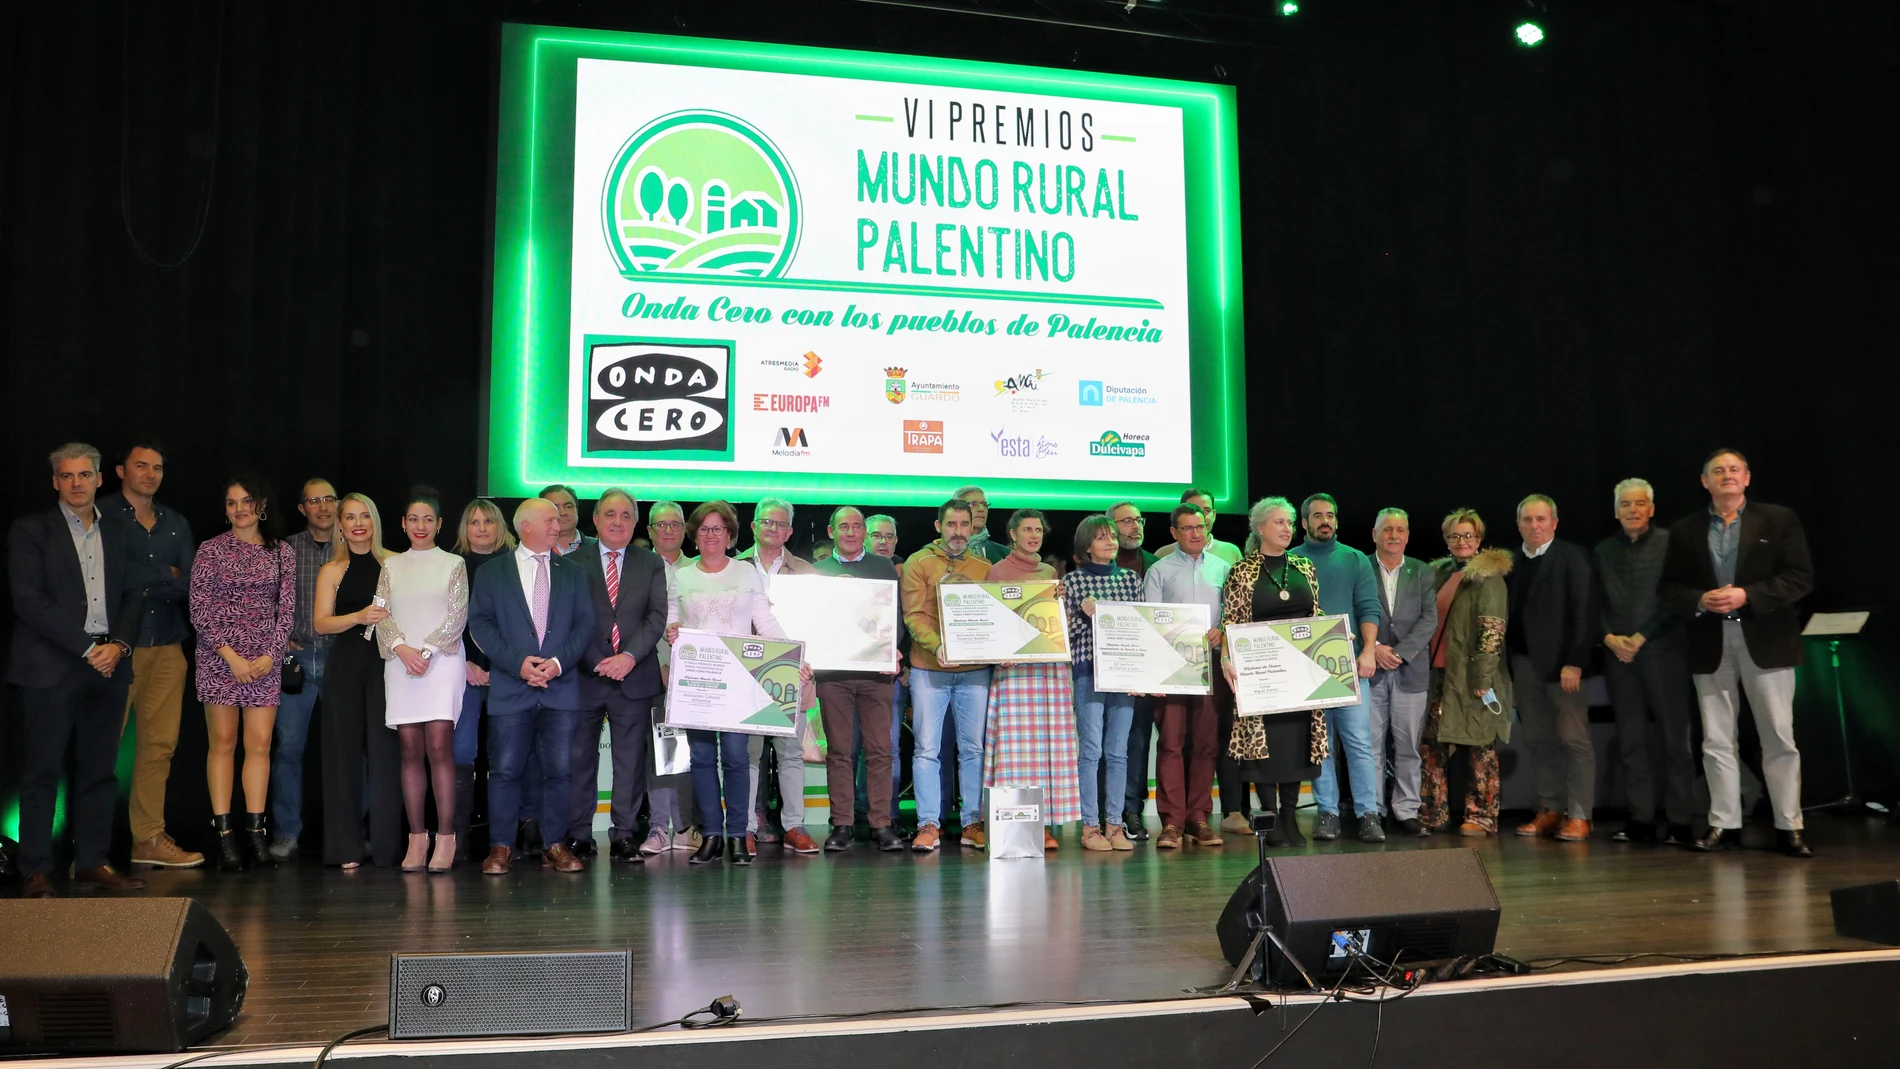 Onda Cero celebra la gala "Mundo Rural Palentino" en la localidad de Guardo